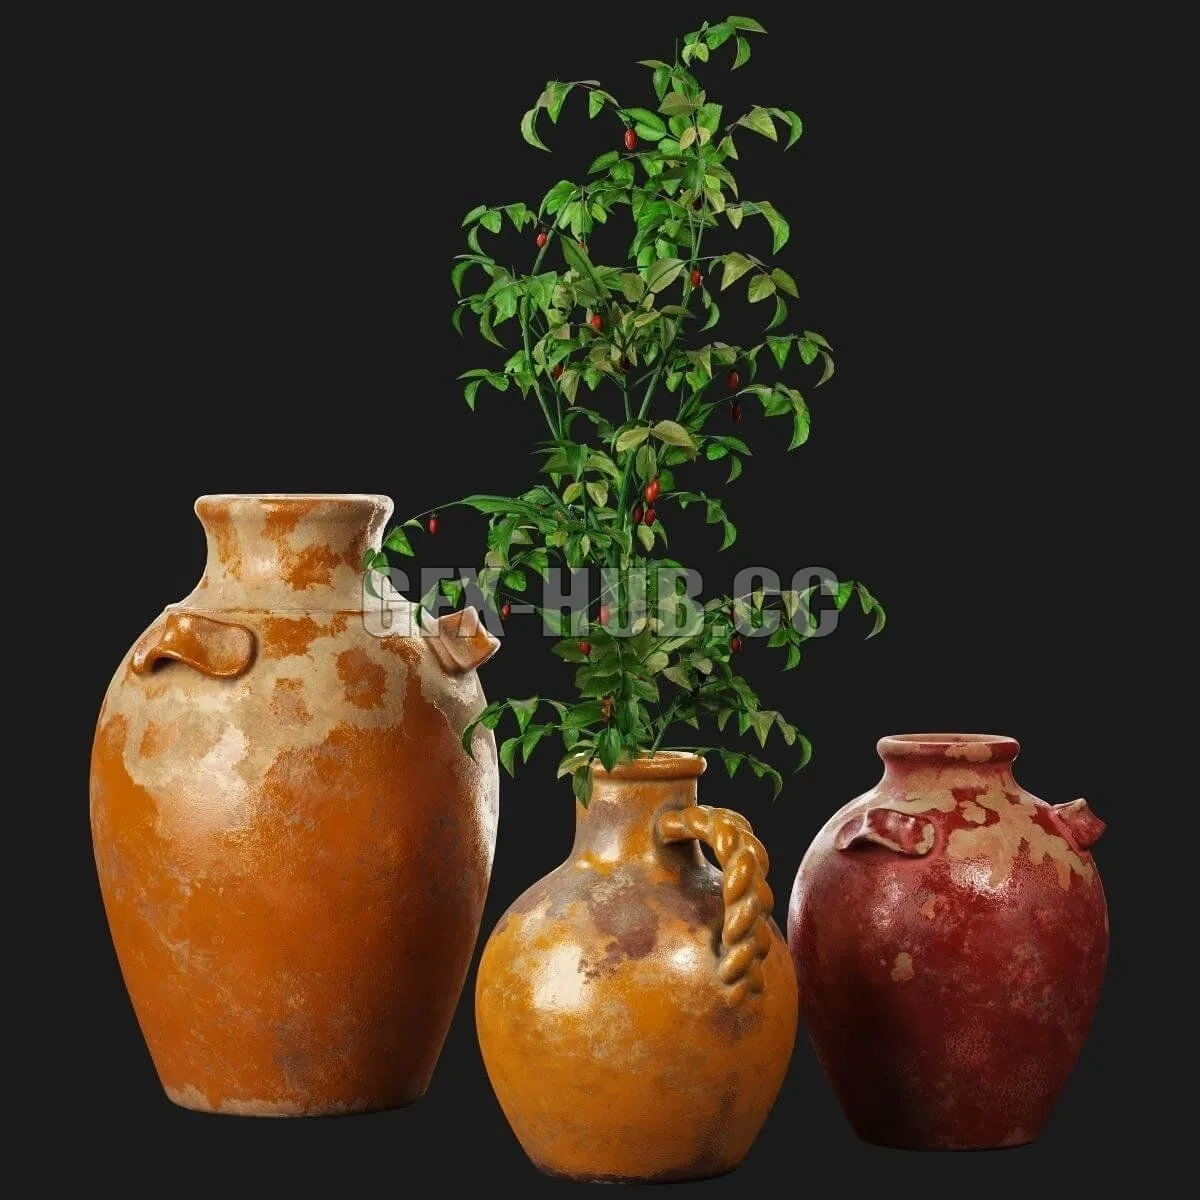 FURNITURE 3D MODELS – Pottery Barn Sicily terra cotta vases